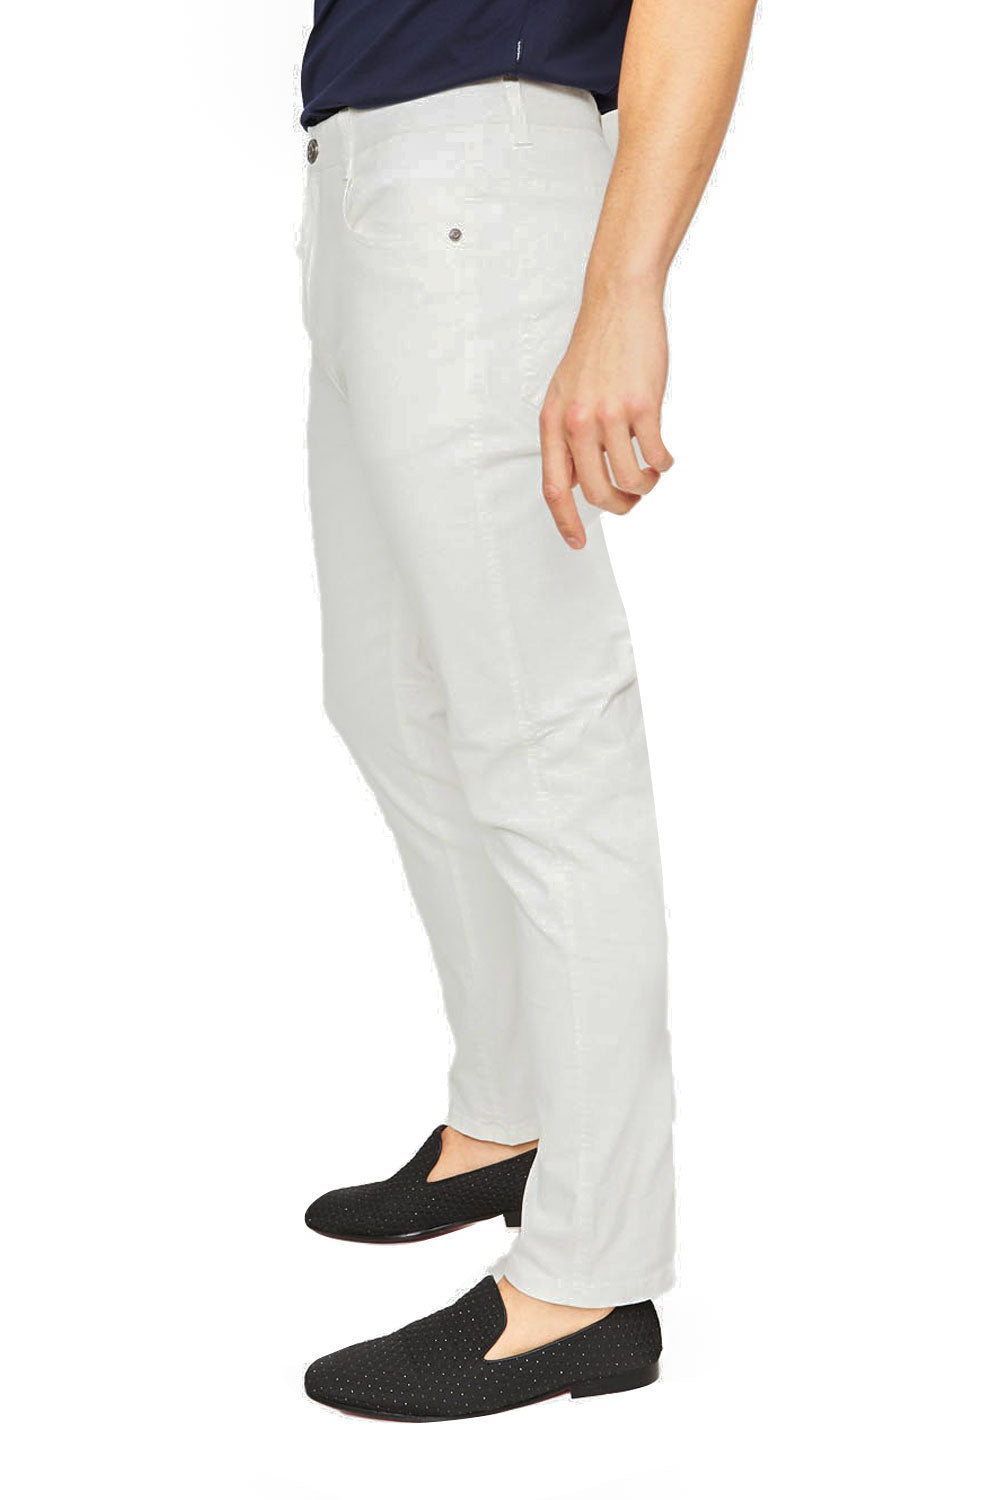 BARABAS Men's solid color White  skinny jeans Pants B2076